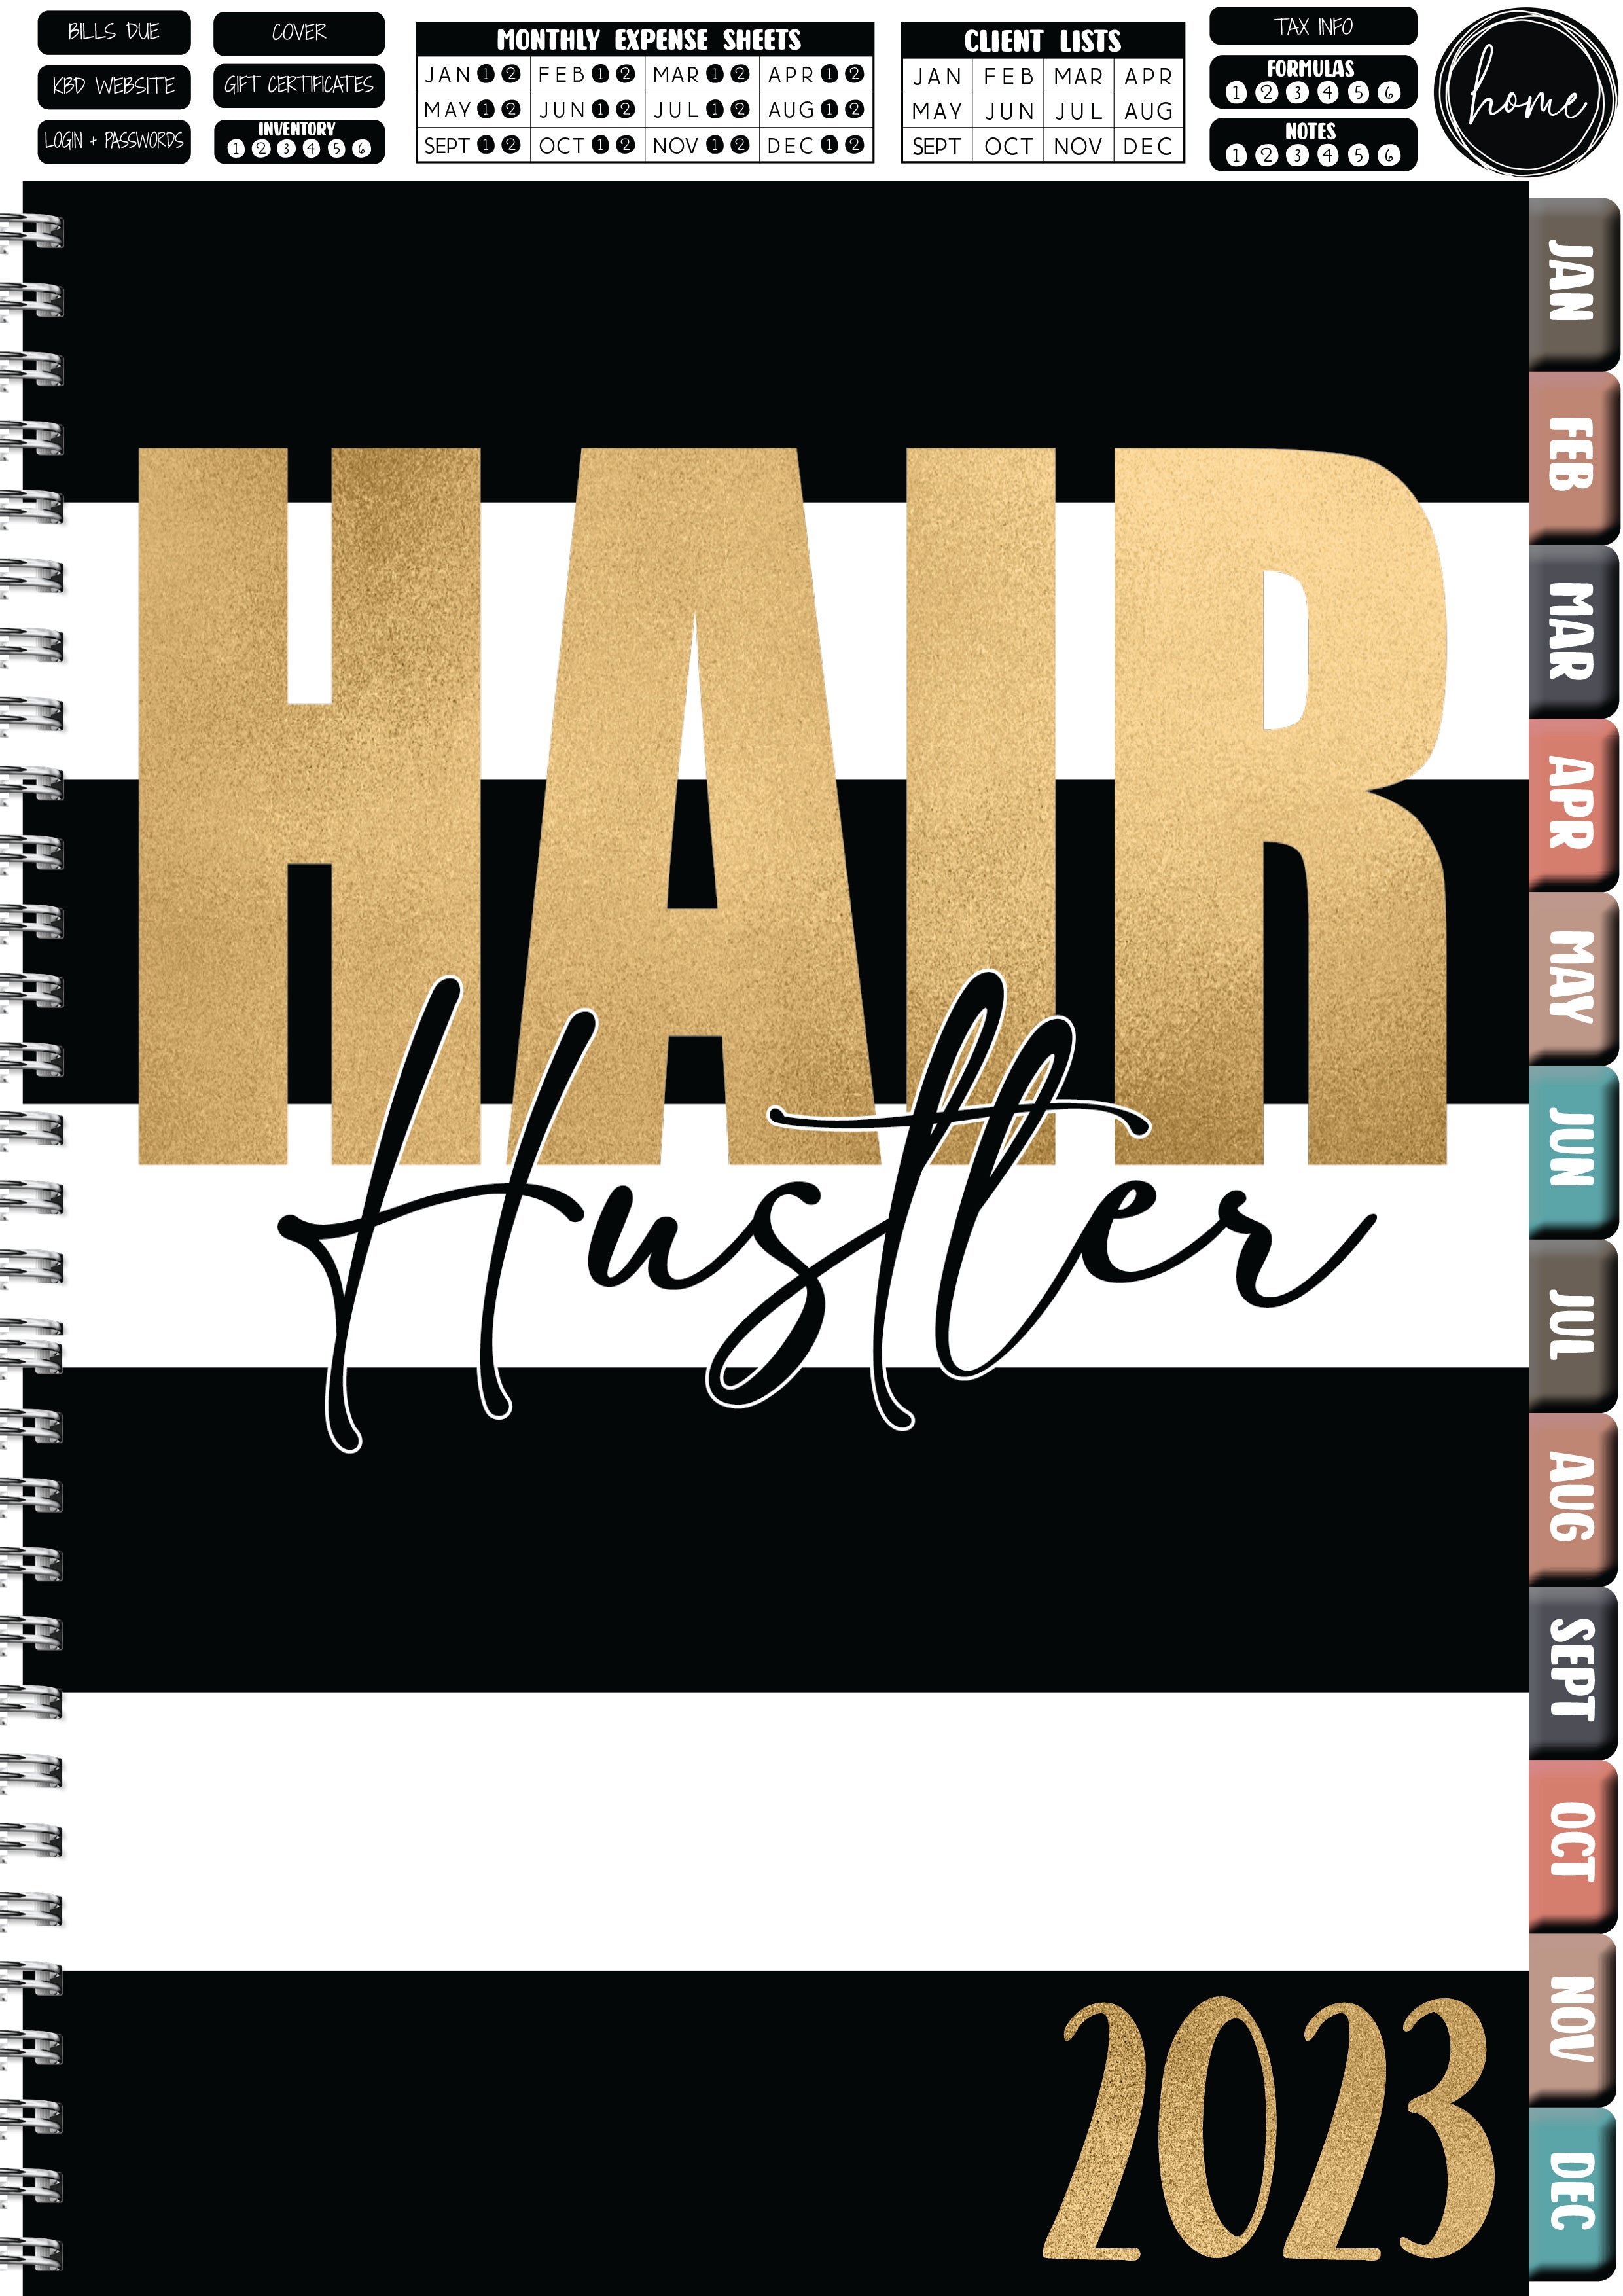 2023 Digital Keepall Appointment Book -  BW STRIPED HAIR HUSTLER